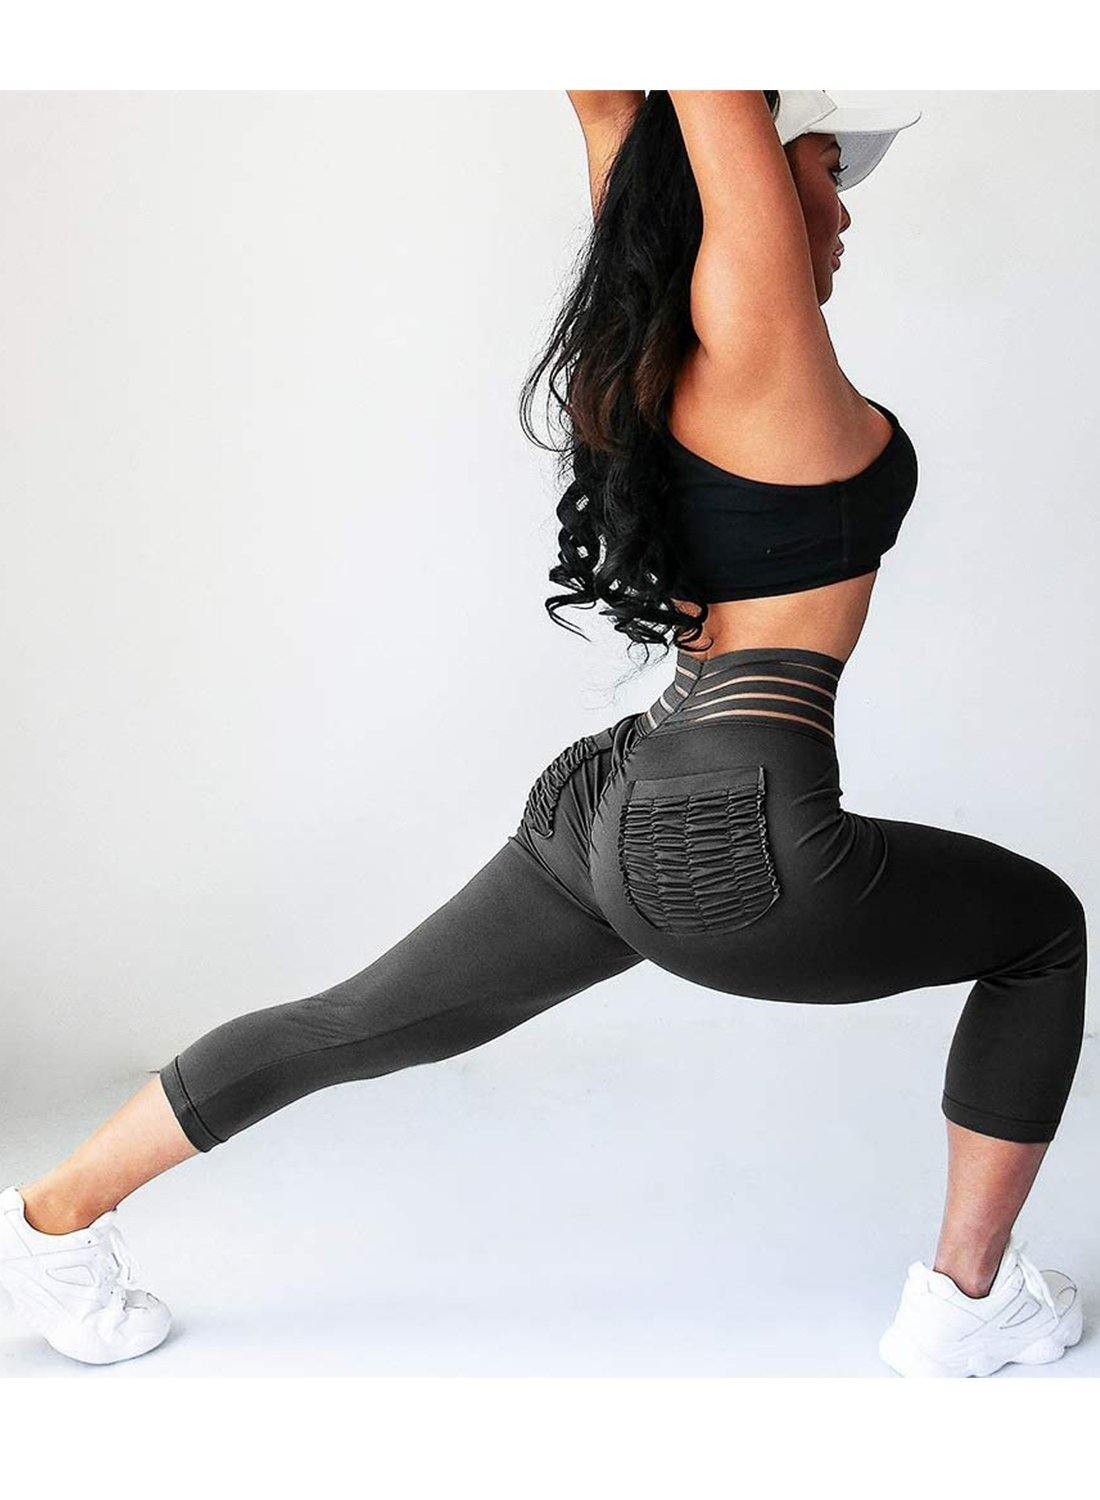 Avamo Women Bottoms Elastic Waisted Capri Yoga Pants Drawstring